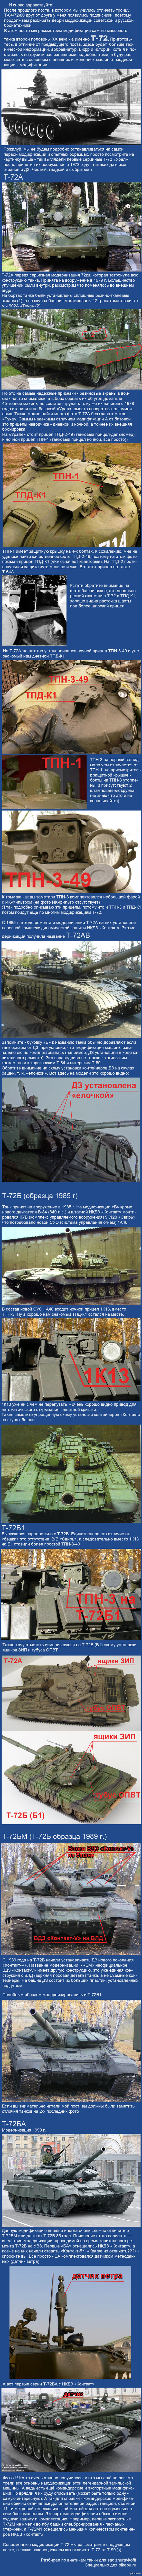 ЛИКБЕЗ 2.0: Учимся различать модификации Т-72 На этот раз конкретно про танк Т-72. Первую часть см. <a href="http://pikabu.ru/story/likbez_uchimsya_razlichat_tanki_t64_t72_i_t80_posobie_dlya_chaynikov_2597232">http://pikabu.ru/story/_2597232</a>